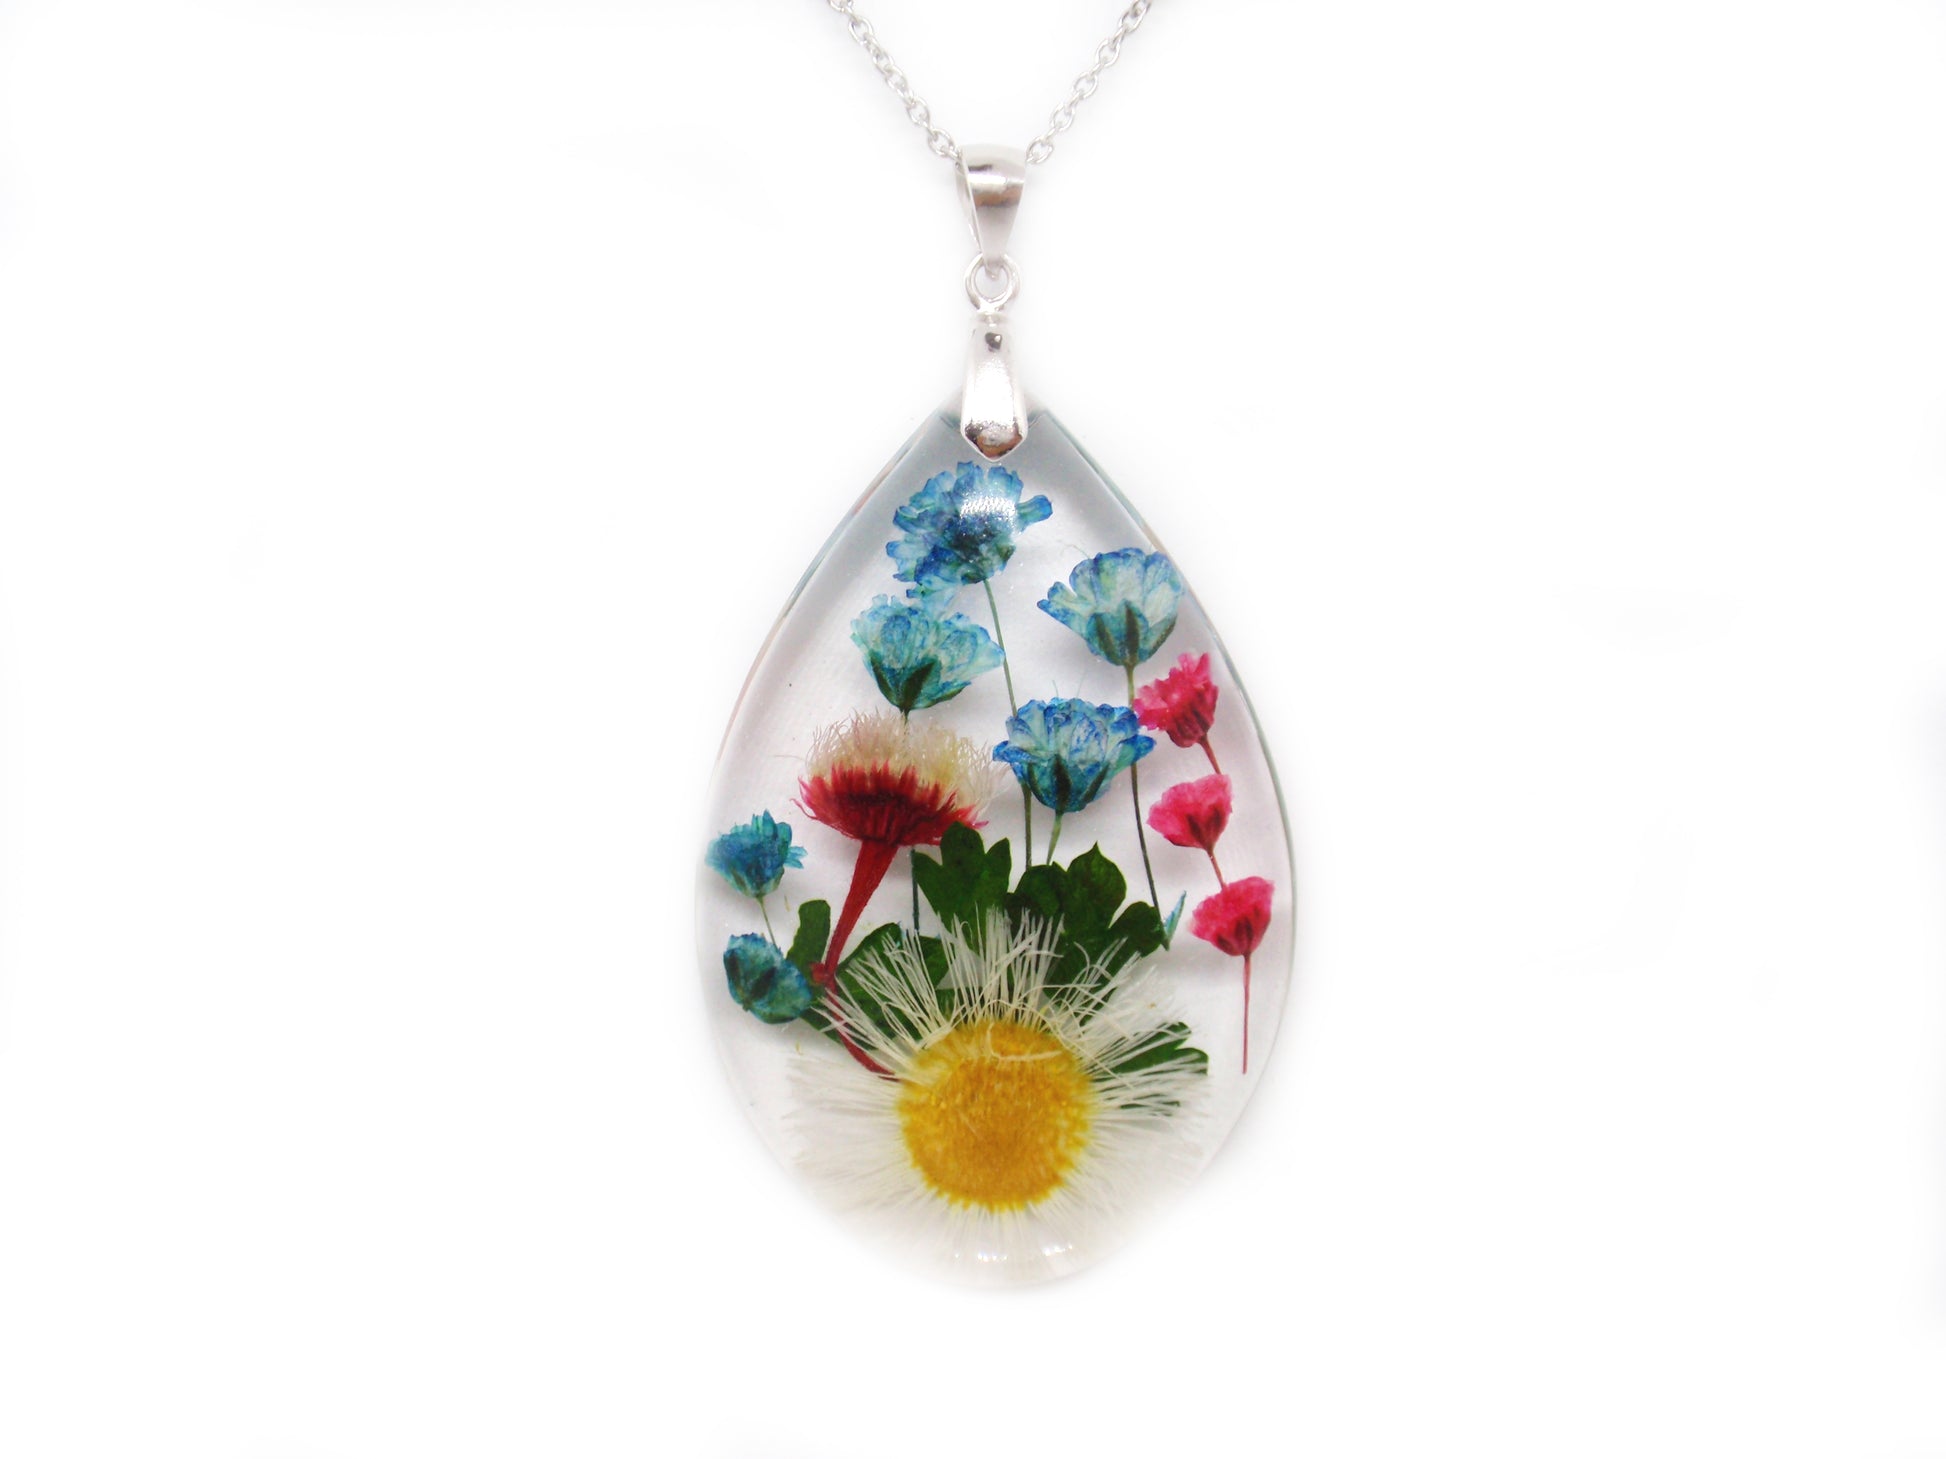 Flower necklace handmade jewelry